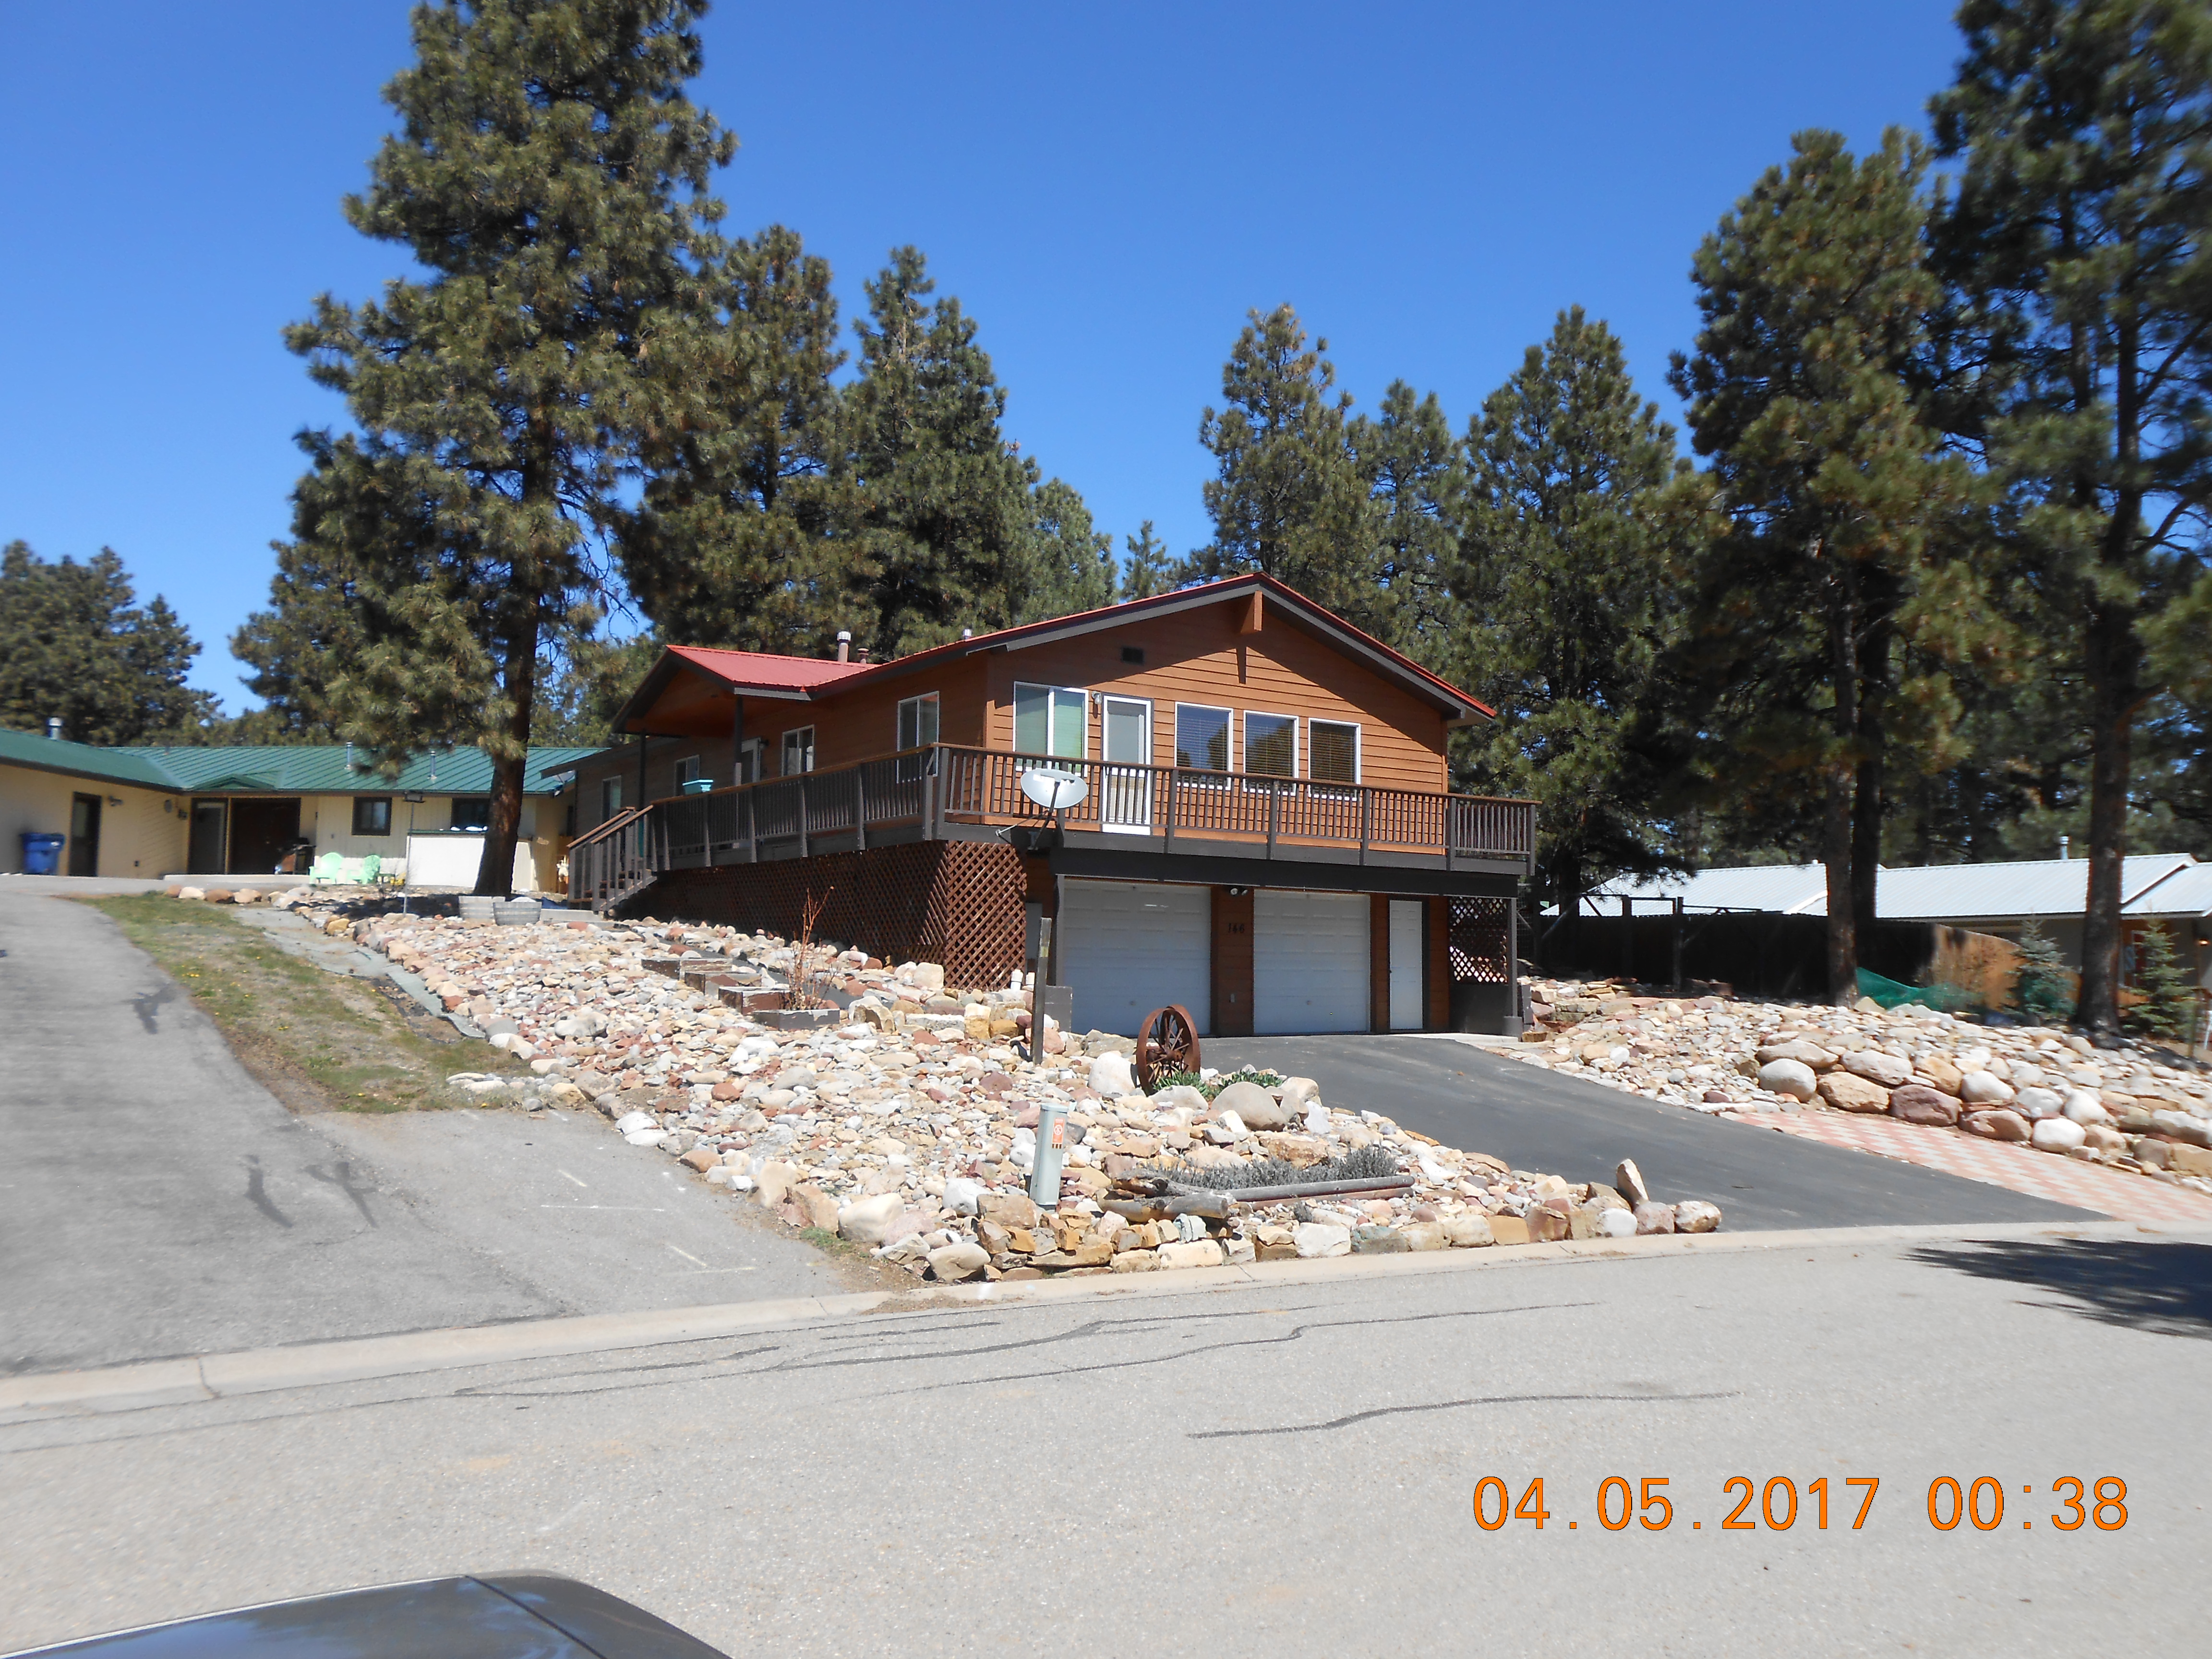 DSCN1376 - Real Estate Durango Colorado | Durango Real Estate Network4608 x 3456